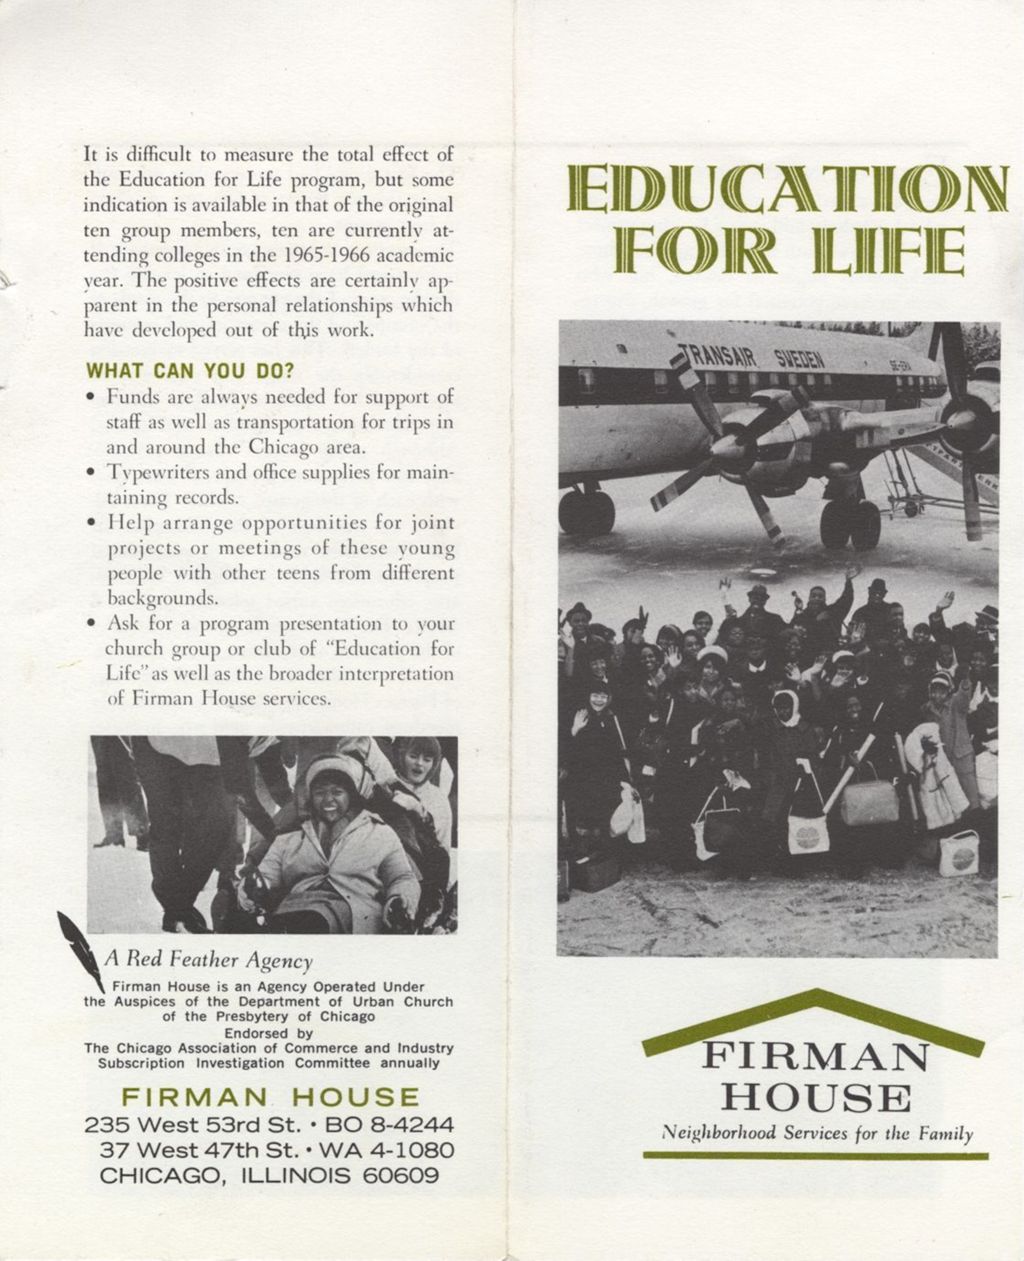 Miniature of Firman House Education for Life program brochure